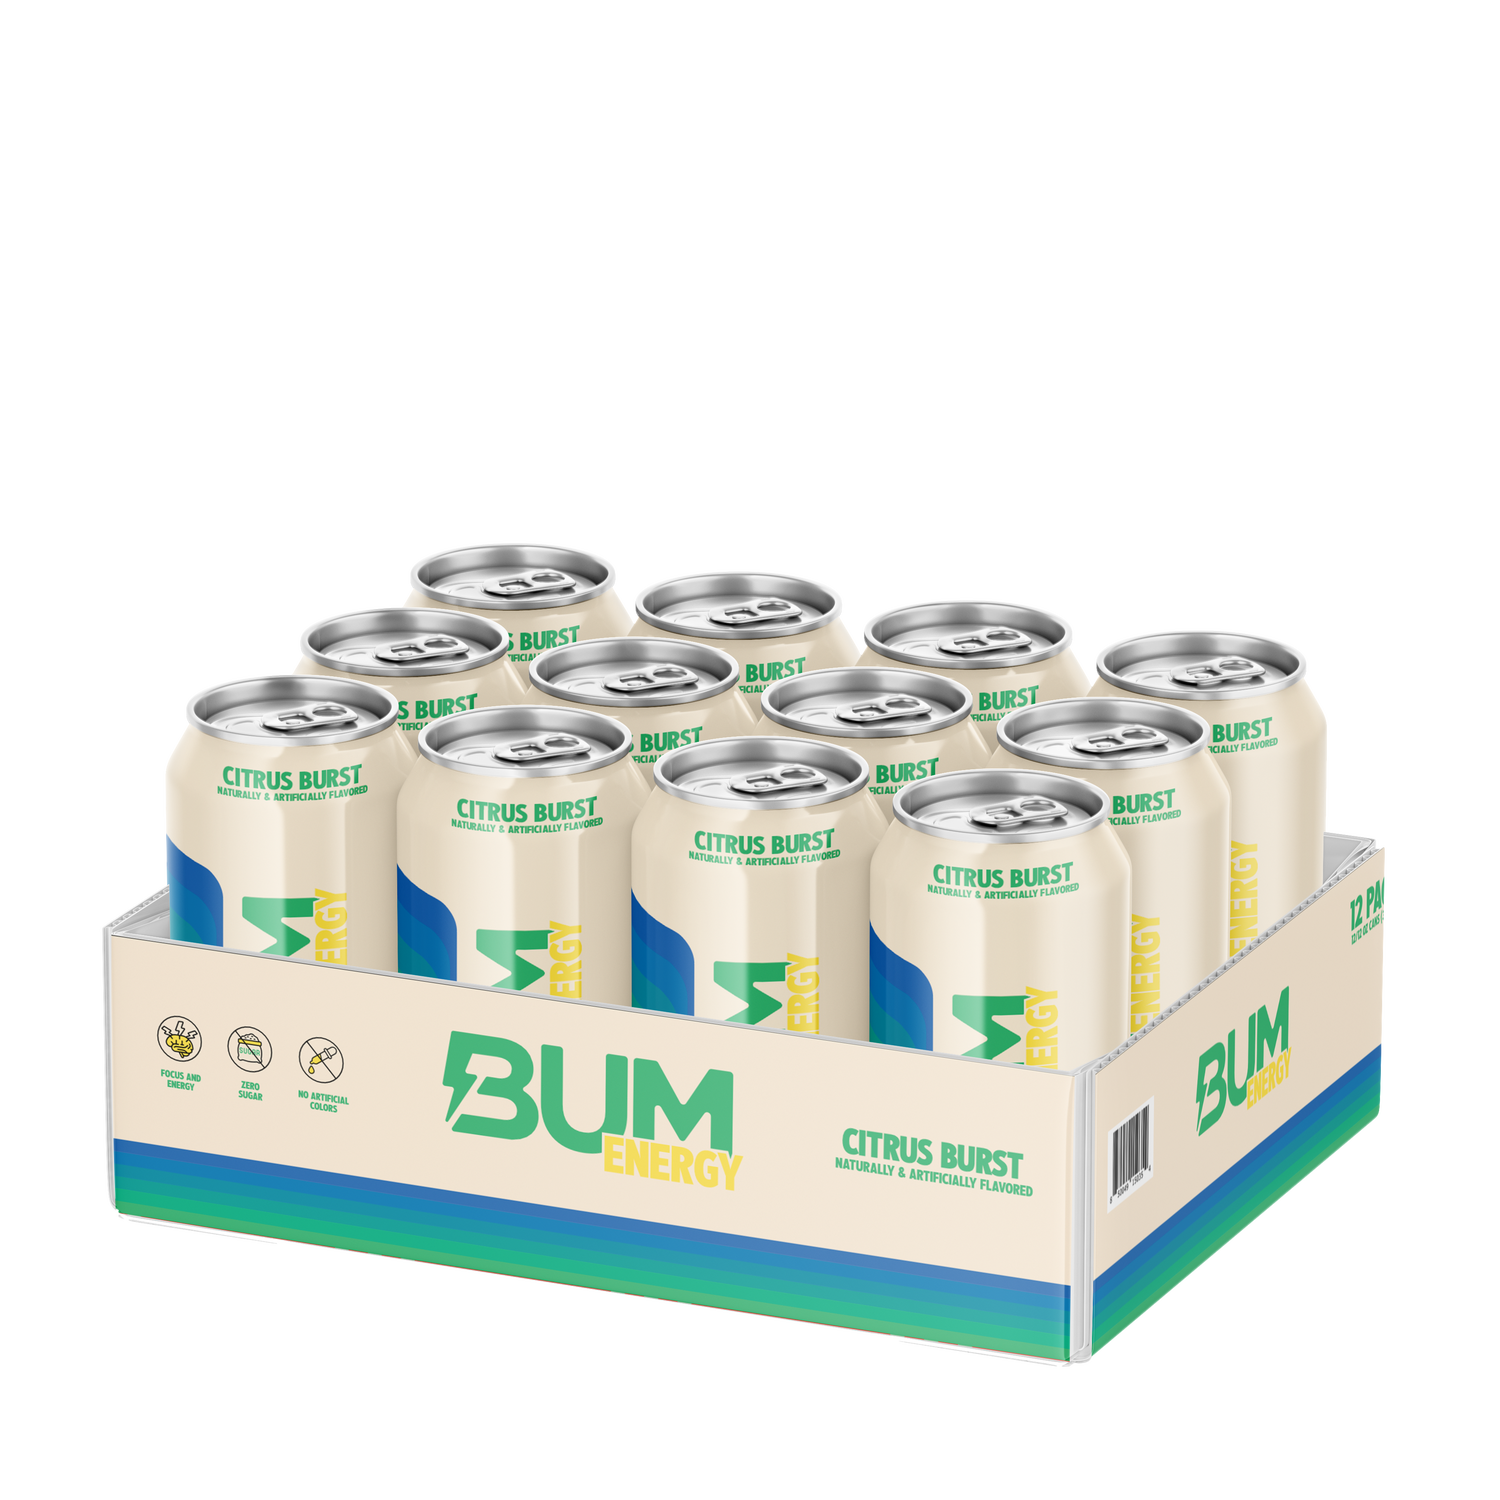 Bum Energy Energy Drink - Citrus Burst - 12Oz. (12 Cans) - Zero Sugar